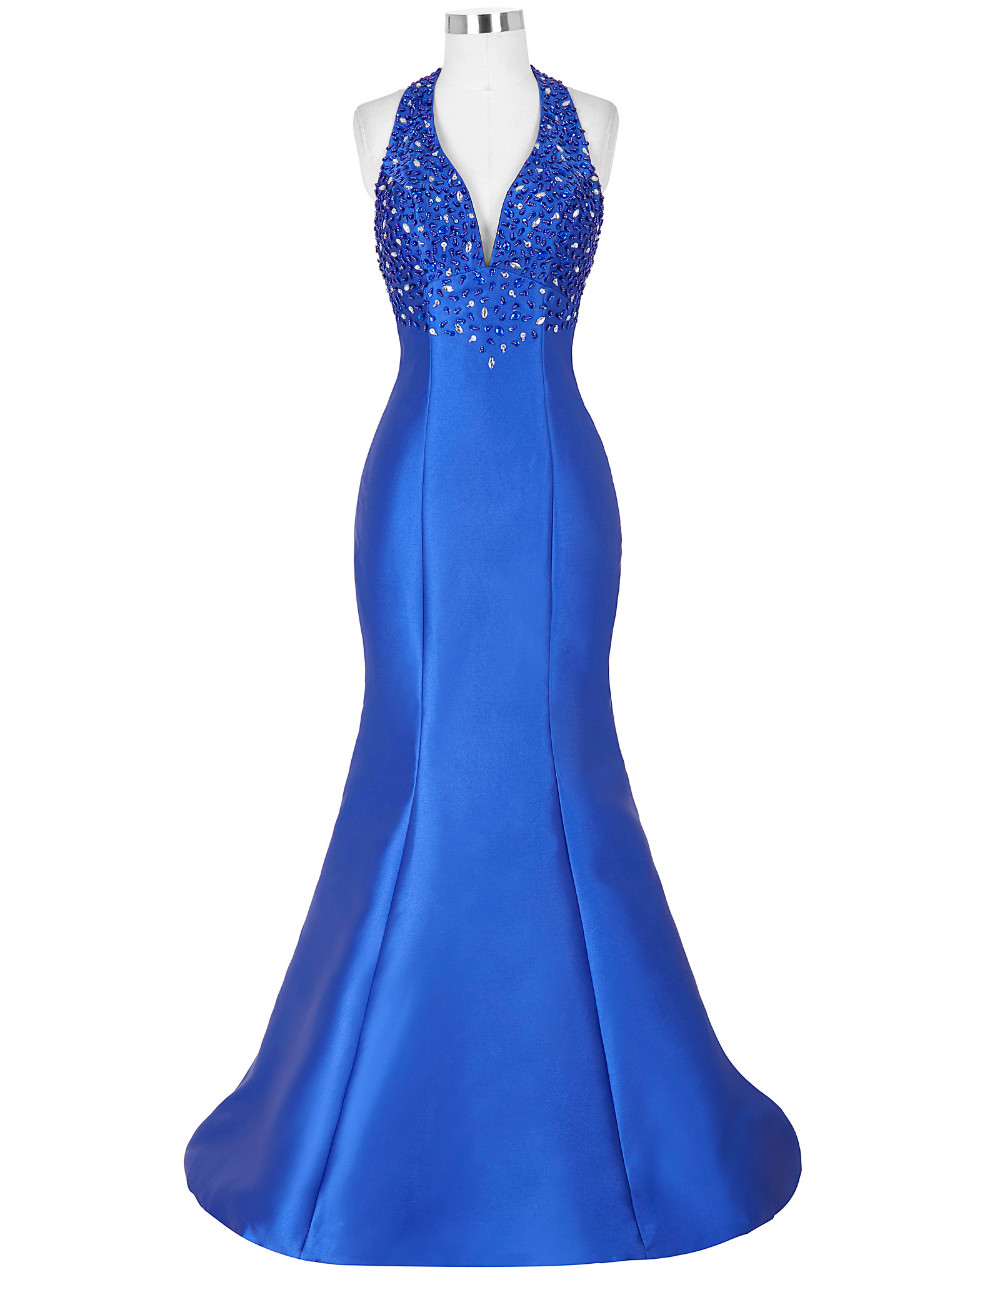 Amazing Blue Satin Mermaid Long Prom Dresses With Rhinestone Beaded Bodice And Halter Neckline